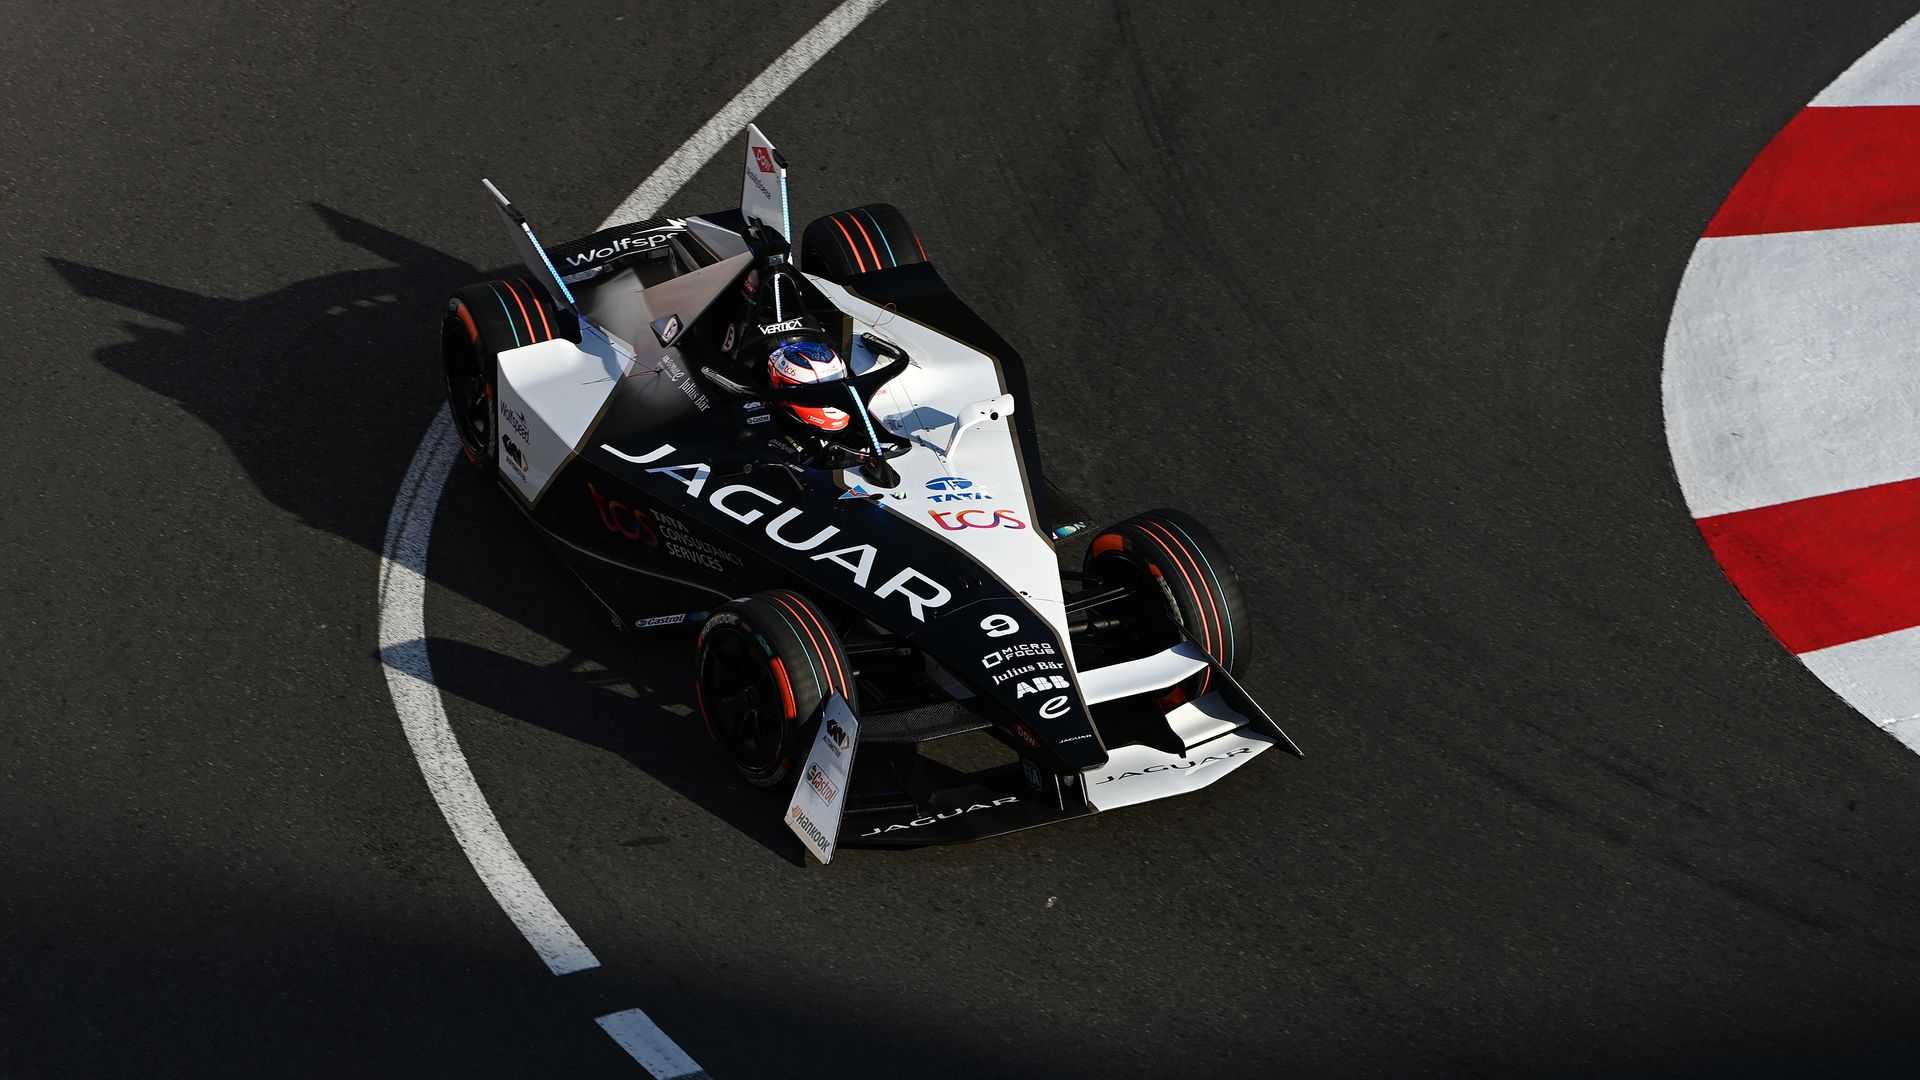 An image of a Formula E race car on a track.